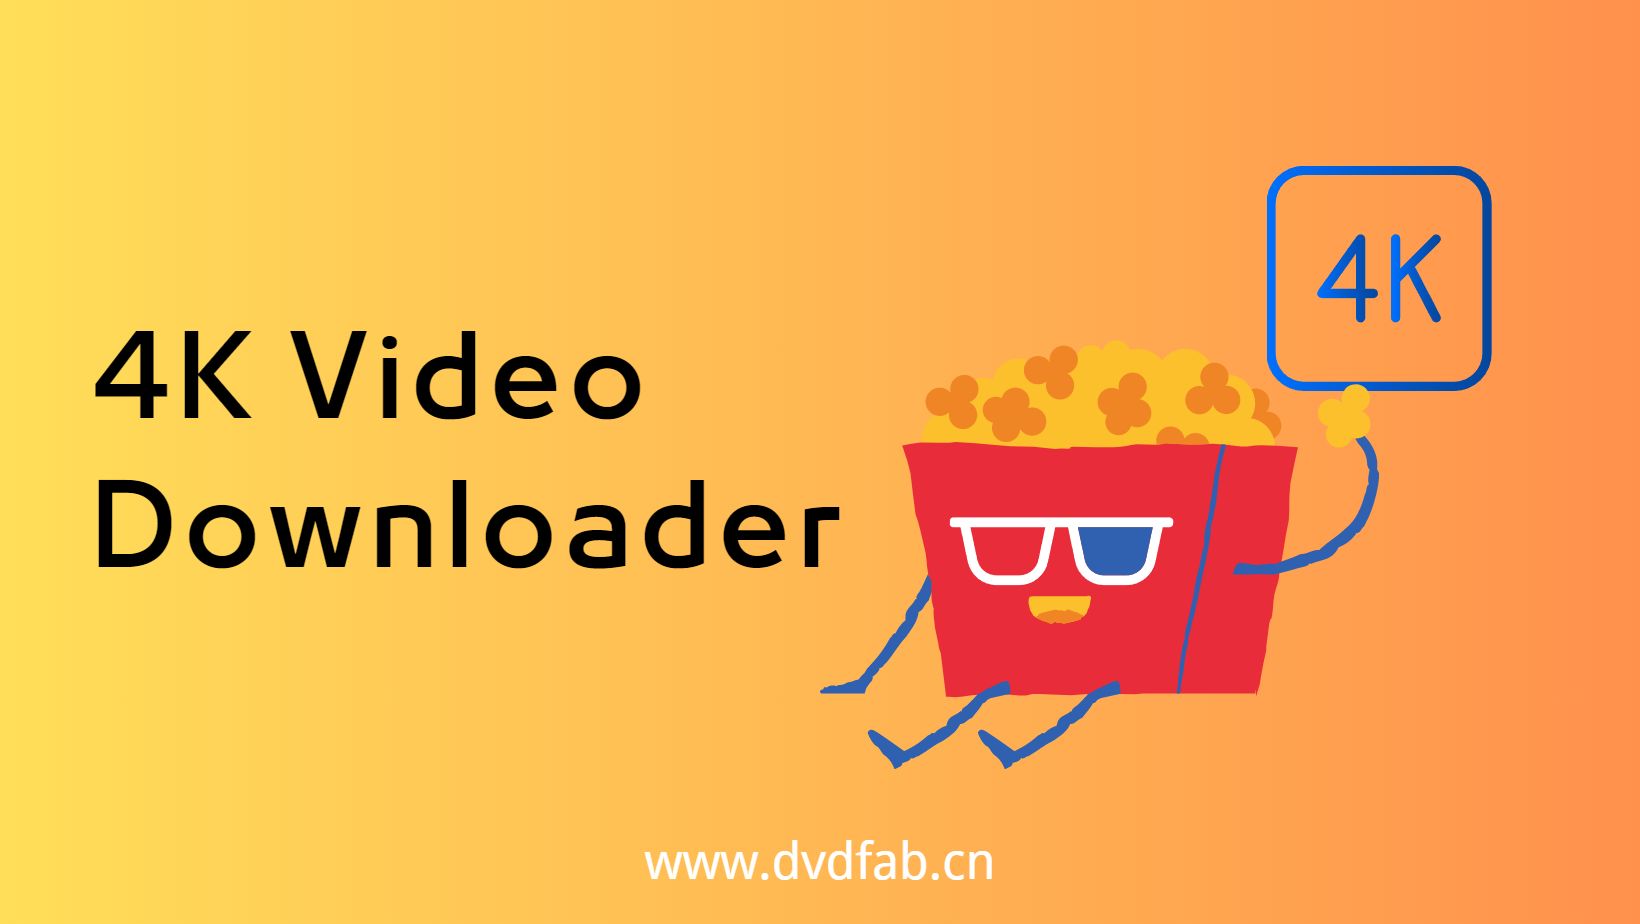 4k video downloader clubic